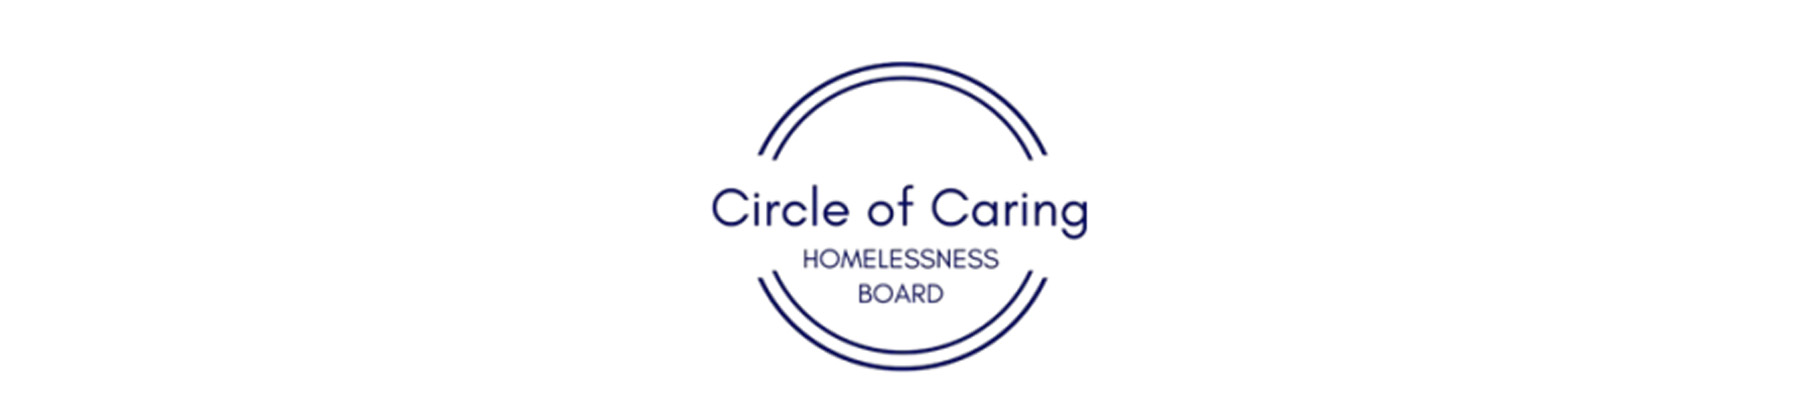 Circle of Caring Homelessness Board